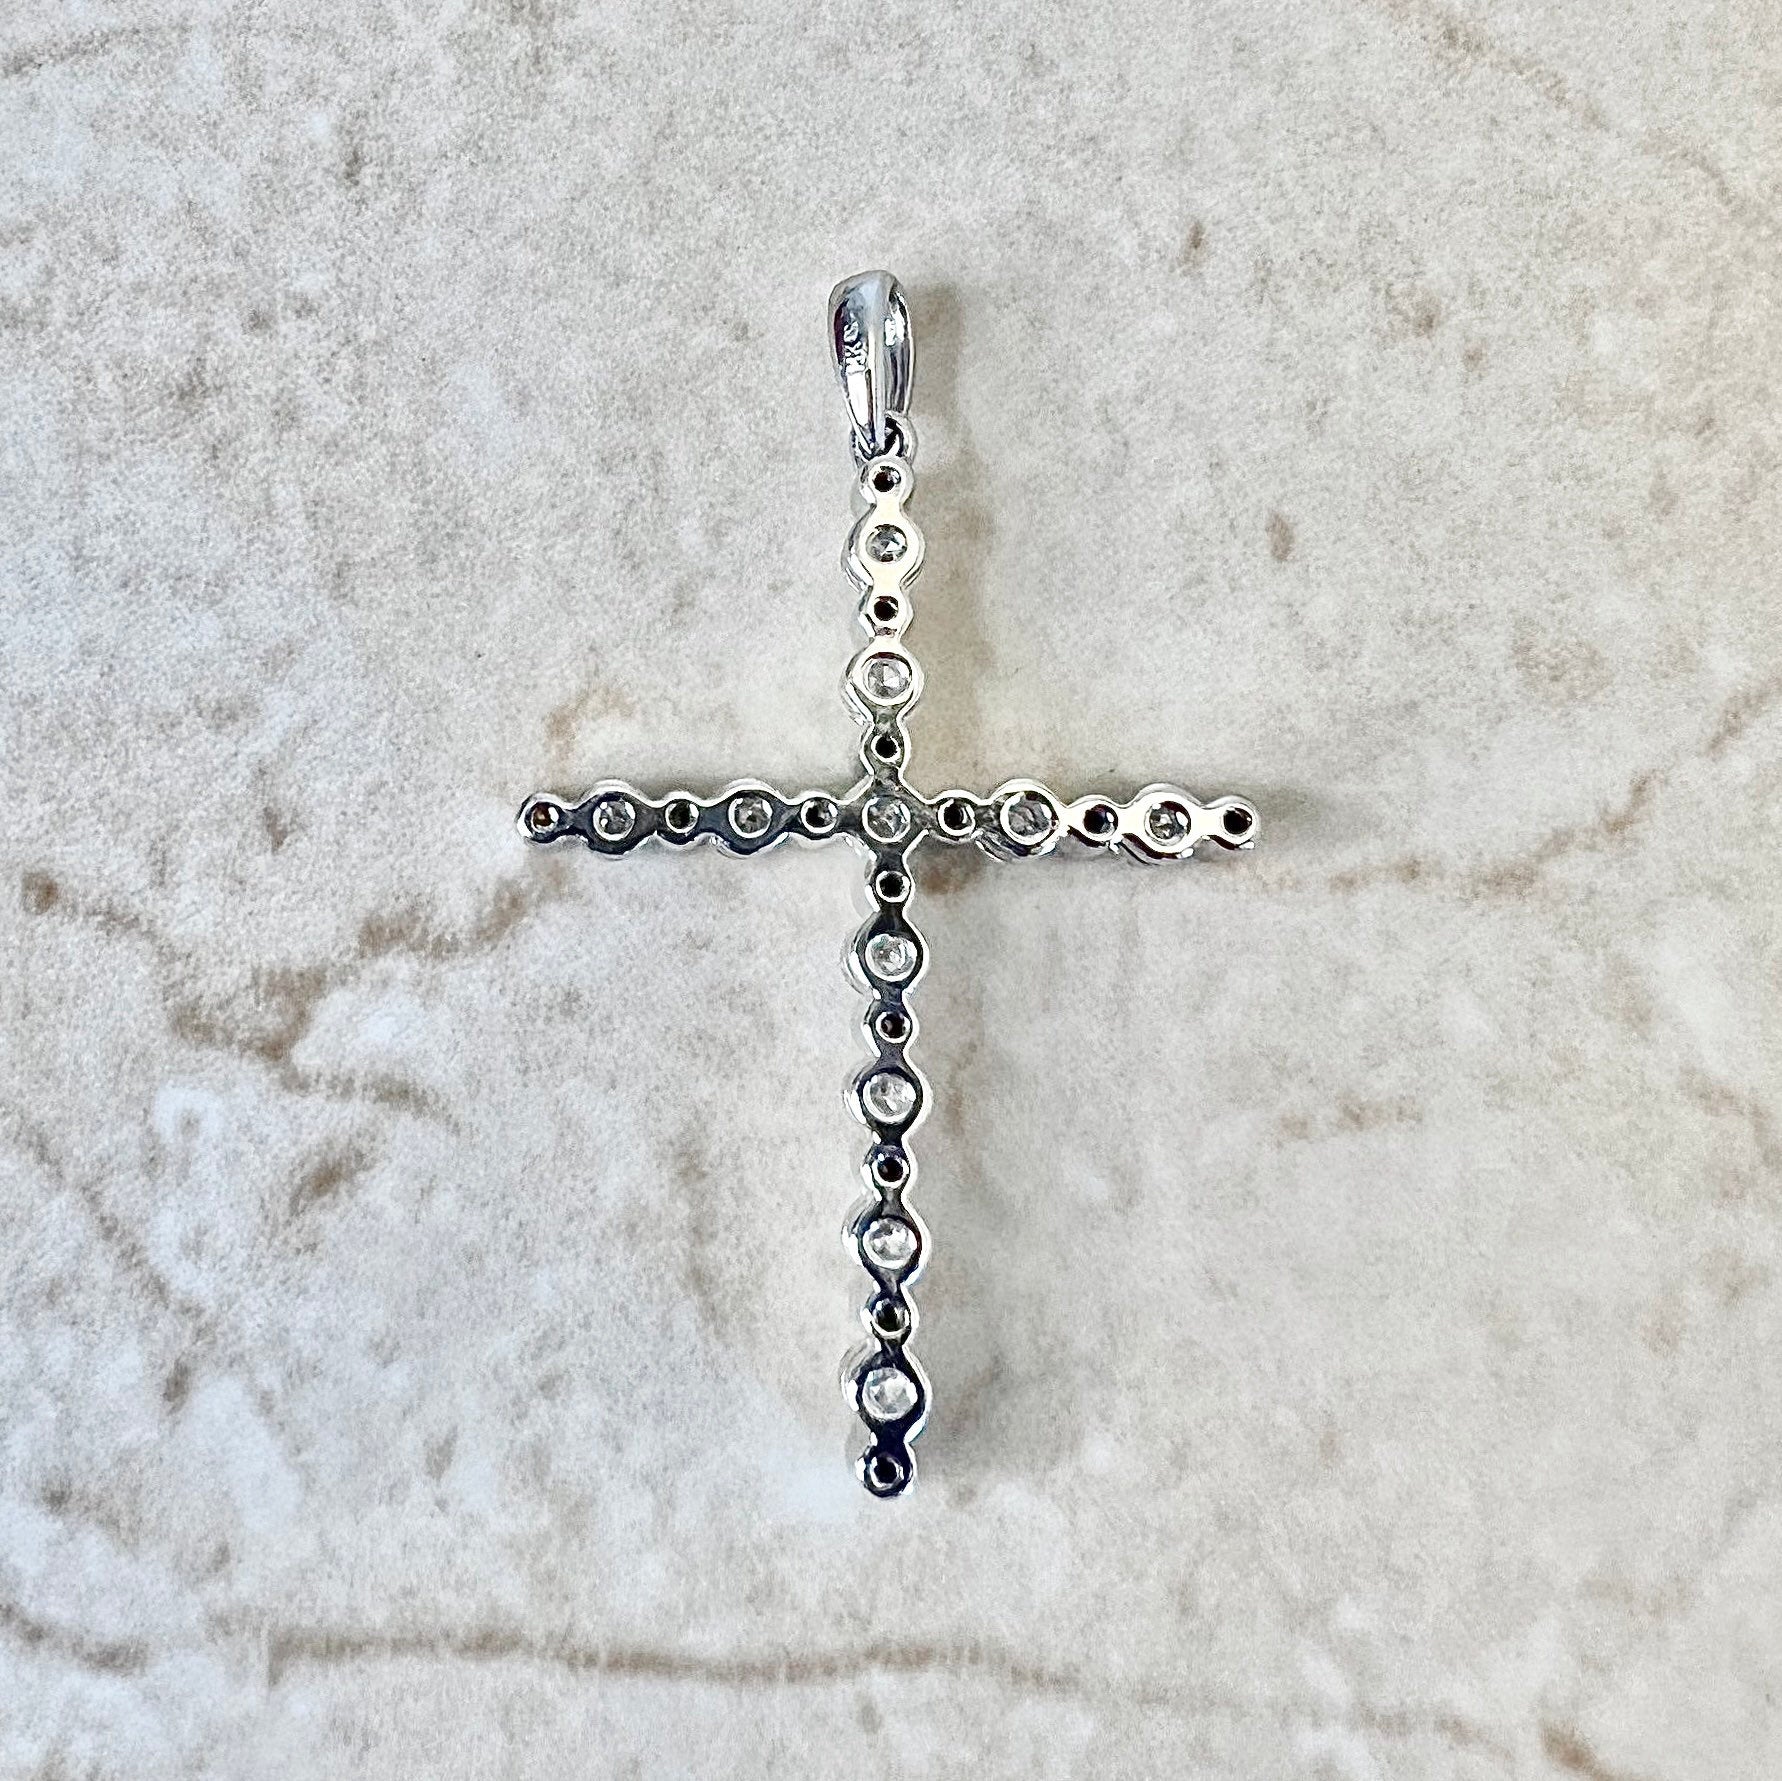 Vintage 14K Diamond Cross Pendant Necklace 1.20 CTTW - White Gold Diamond Pendant - Religious Jewelry - Birthday Gift For Her - Jewelry Sale